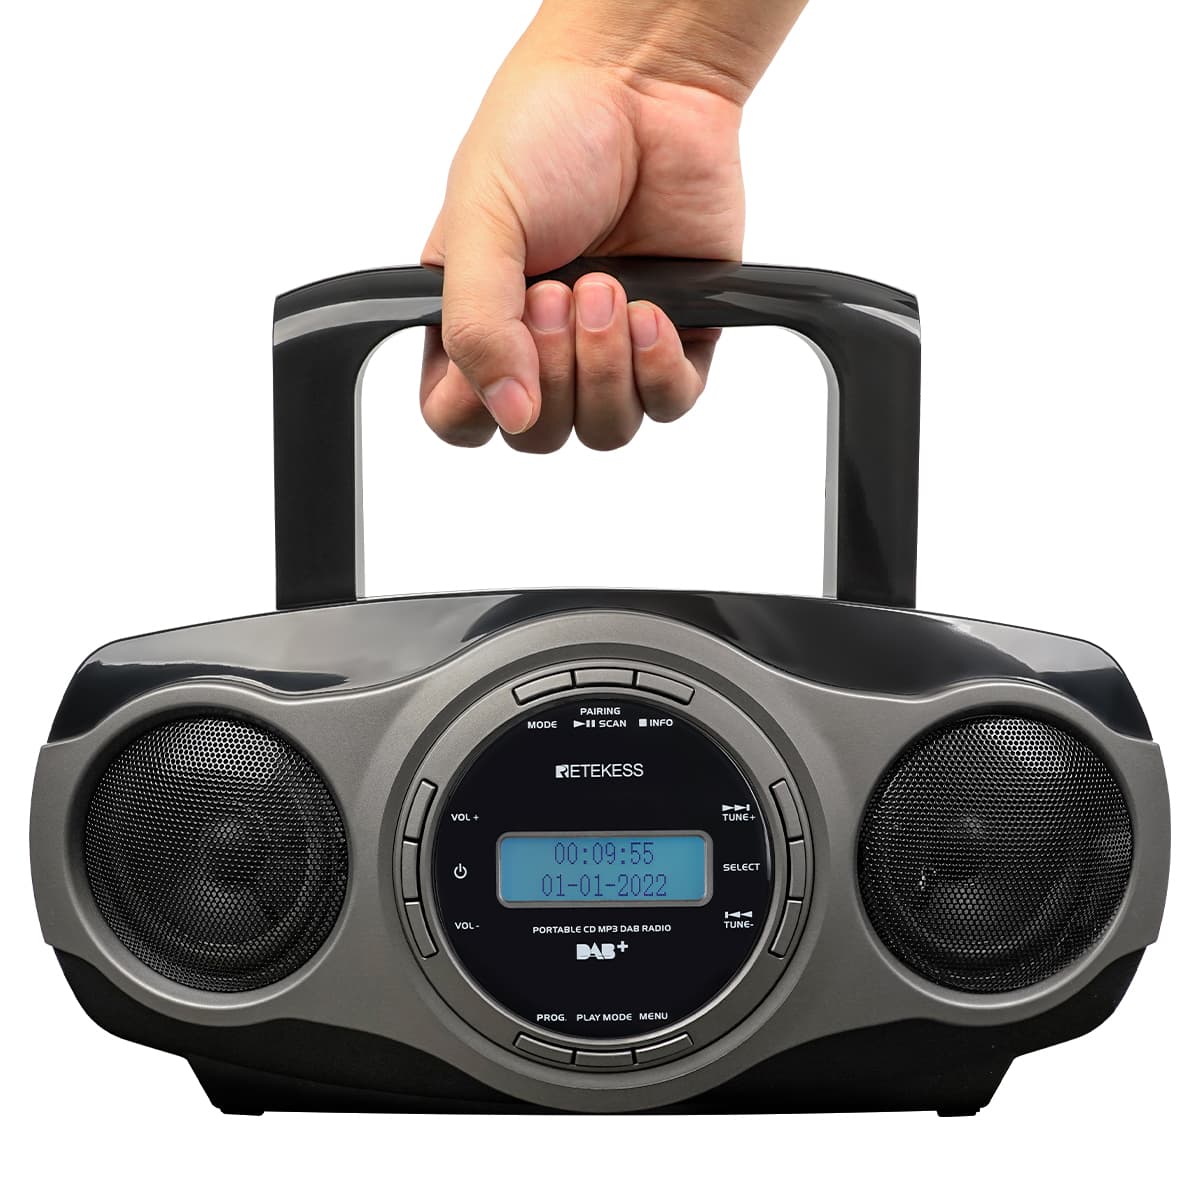 Retekess Stereo FM Radio Portable player, Receive DAB Station, Support USB, CD, AUX, European Version